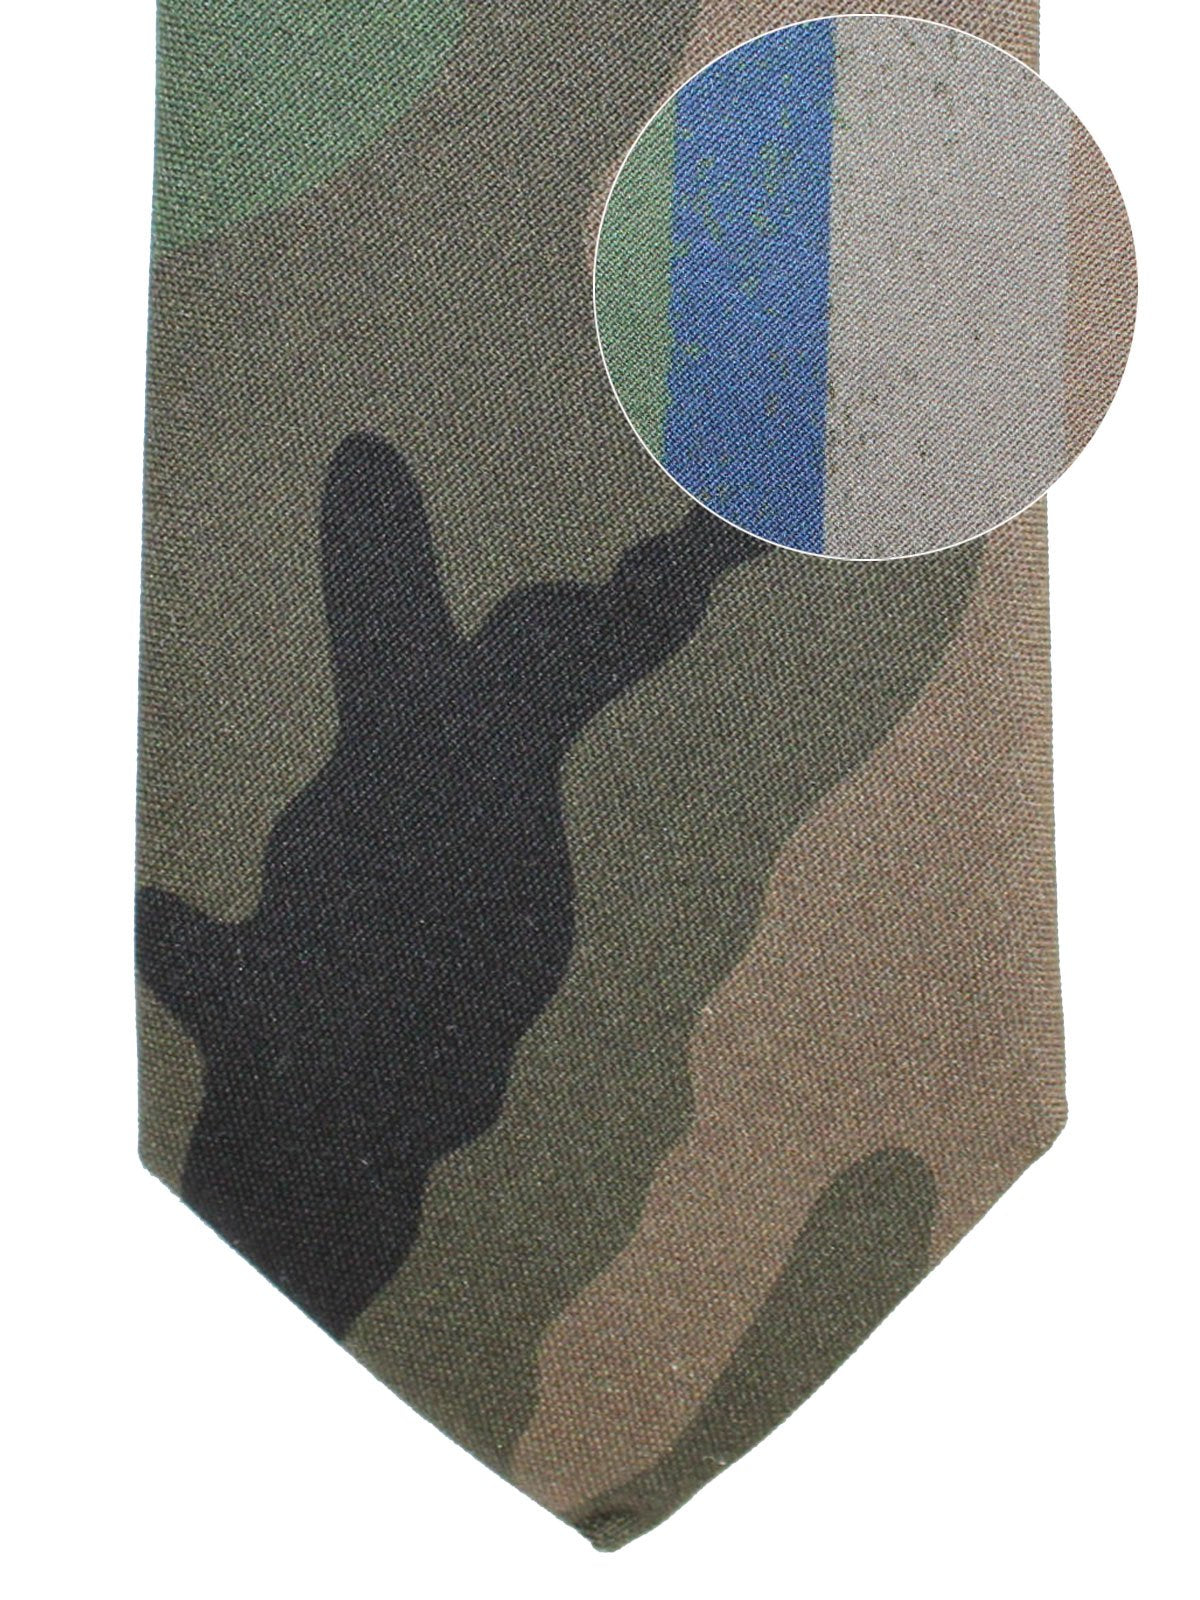 Valentino Skinny Tie - Green Gray Navy Camouflage Stripes